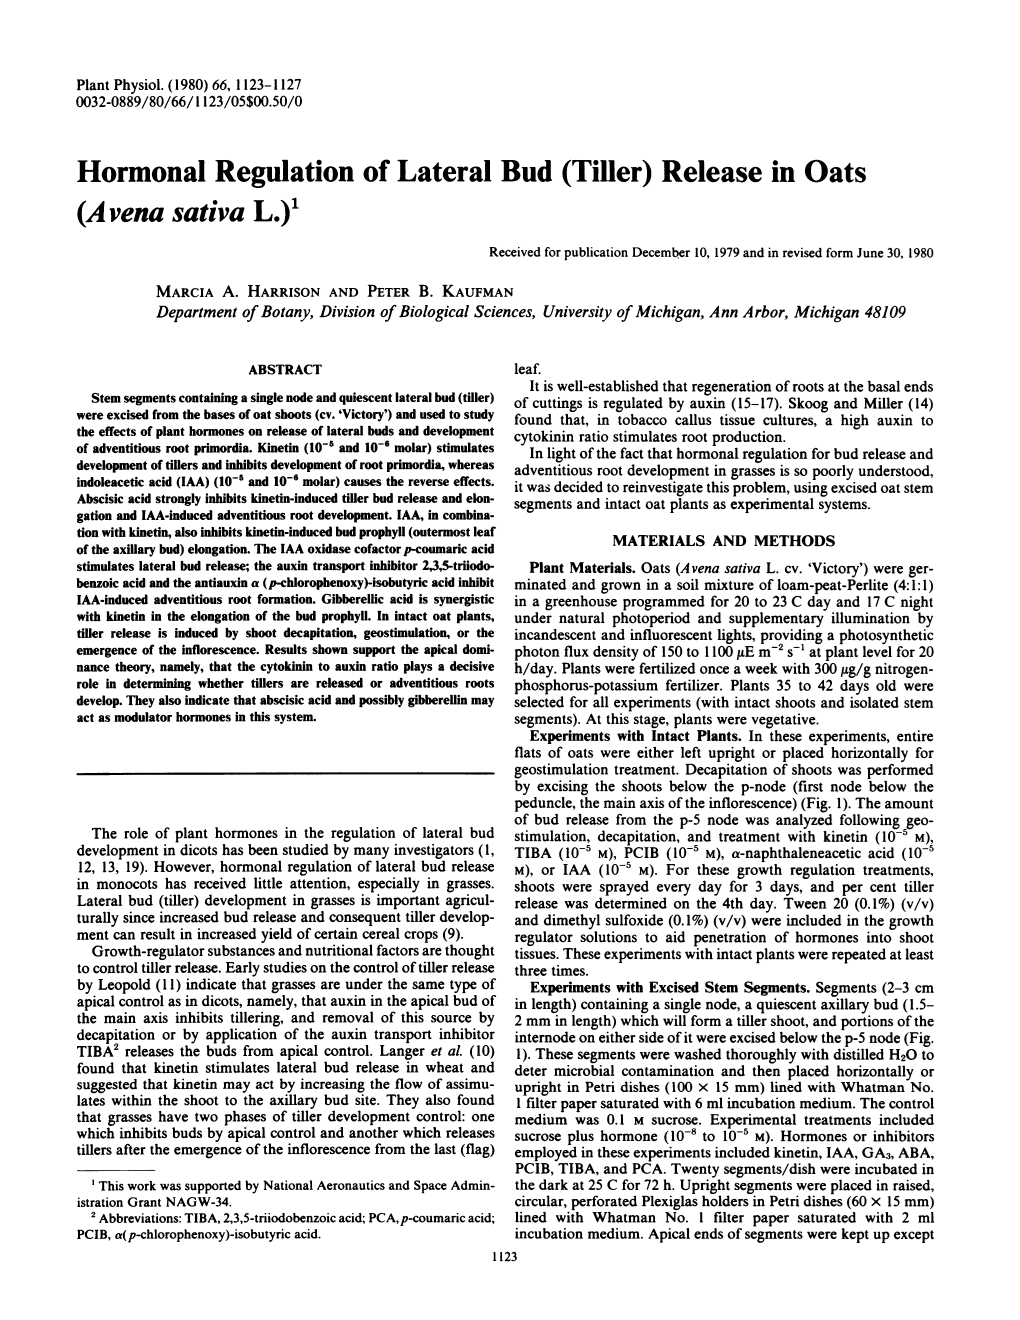 Hormonal Regulation of Lateral Bud (Tiller) Release in Oats (Avena Sativa L.)' Received for Publication December 10, 1979 and in Revised Form June 30, 1980